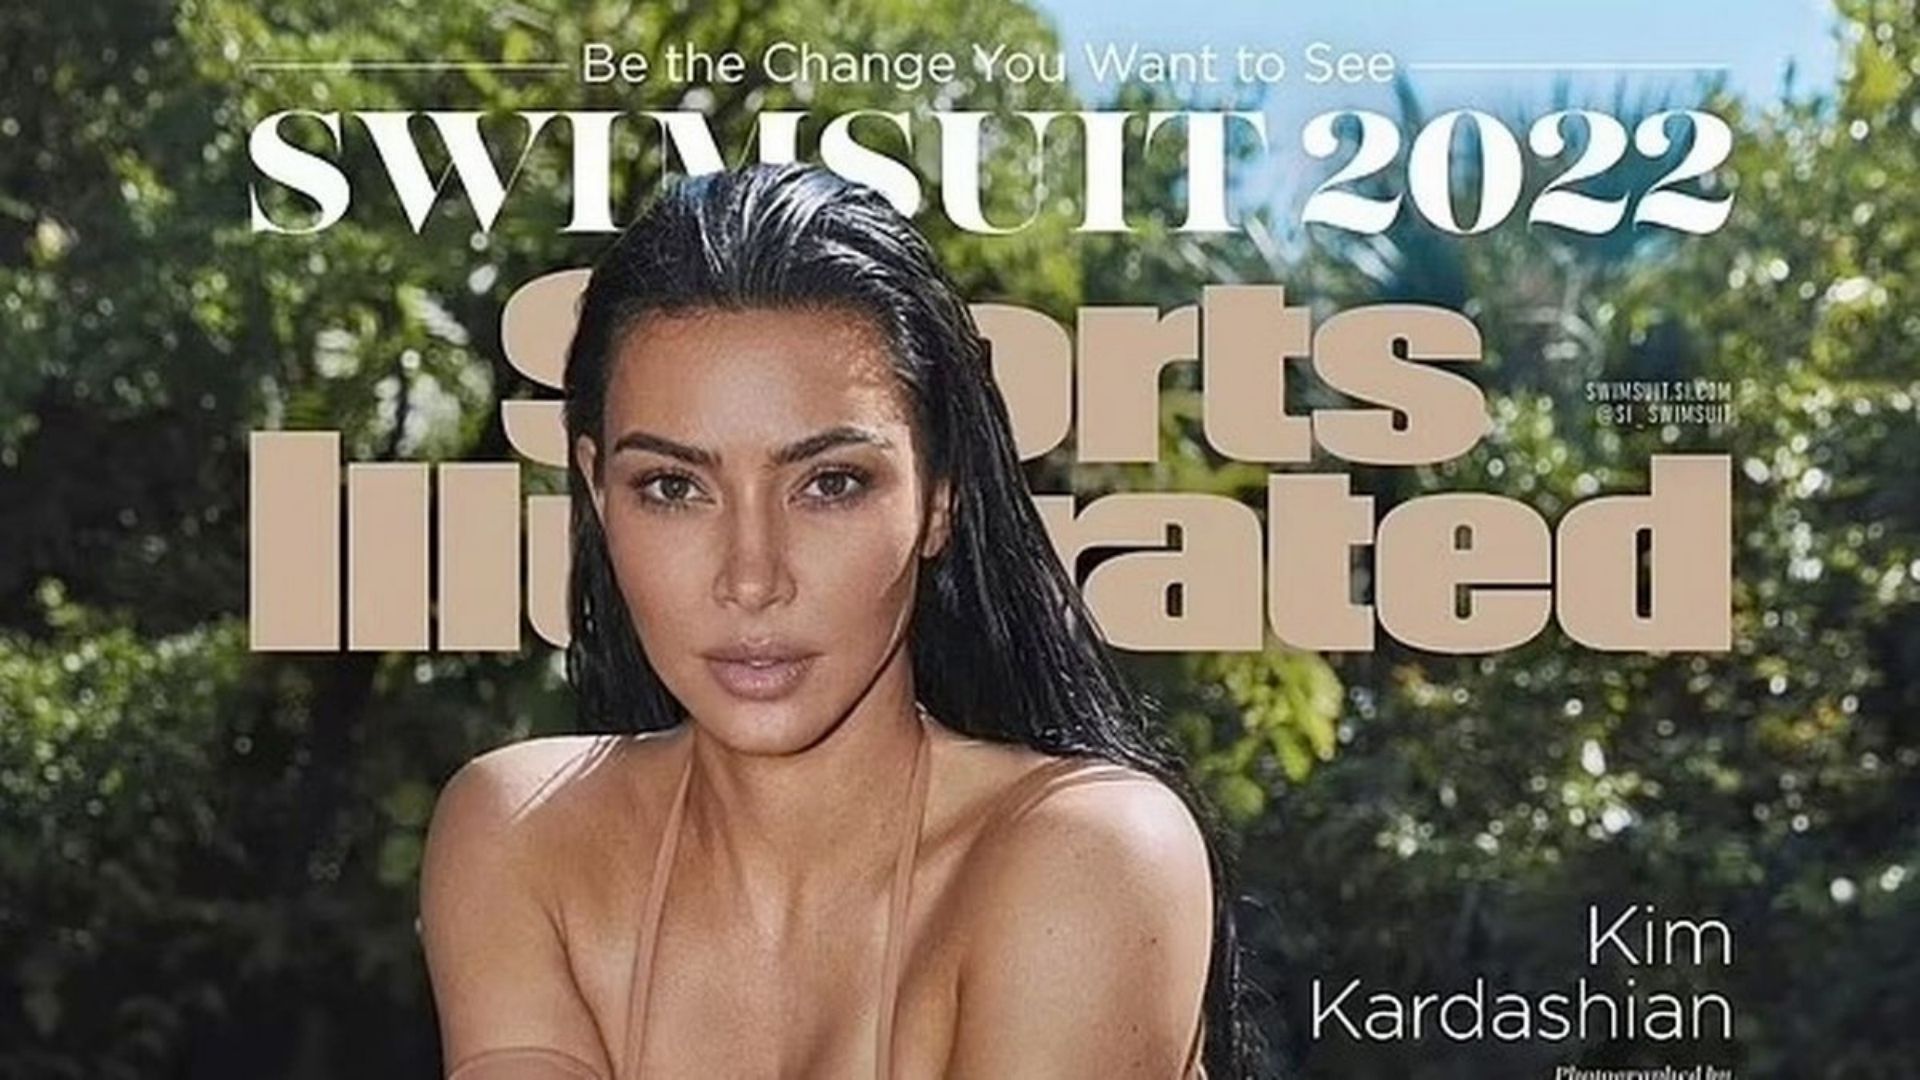 Sports Illustrated Swimsuit picking Kim Kardashian as the cover model